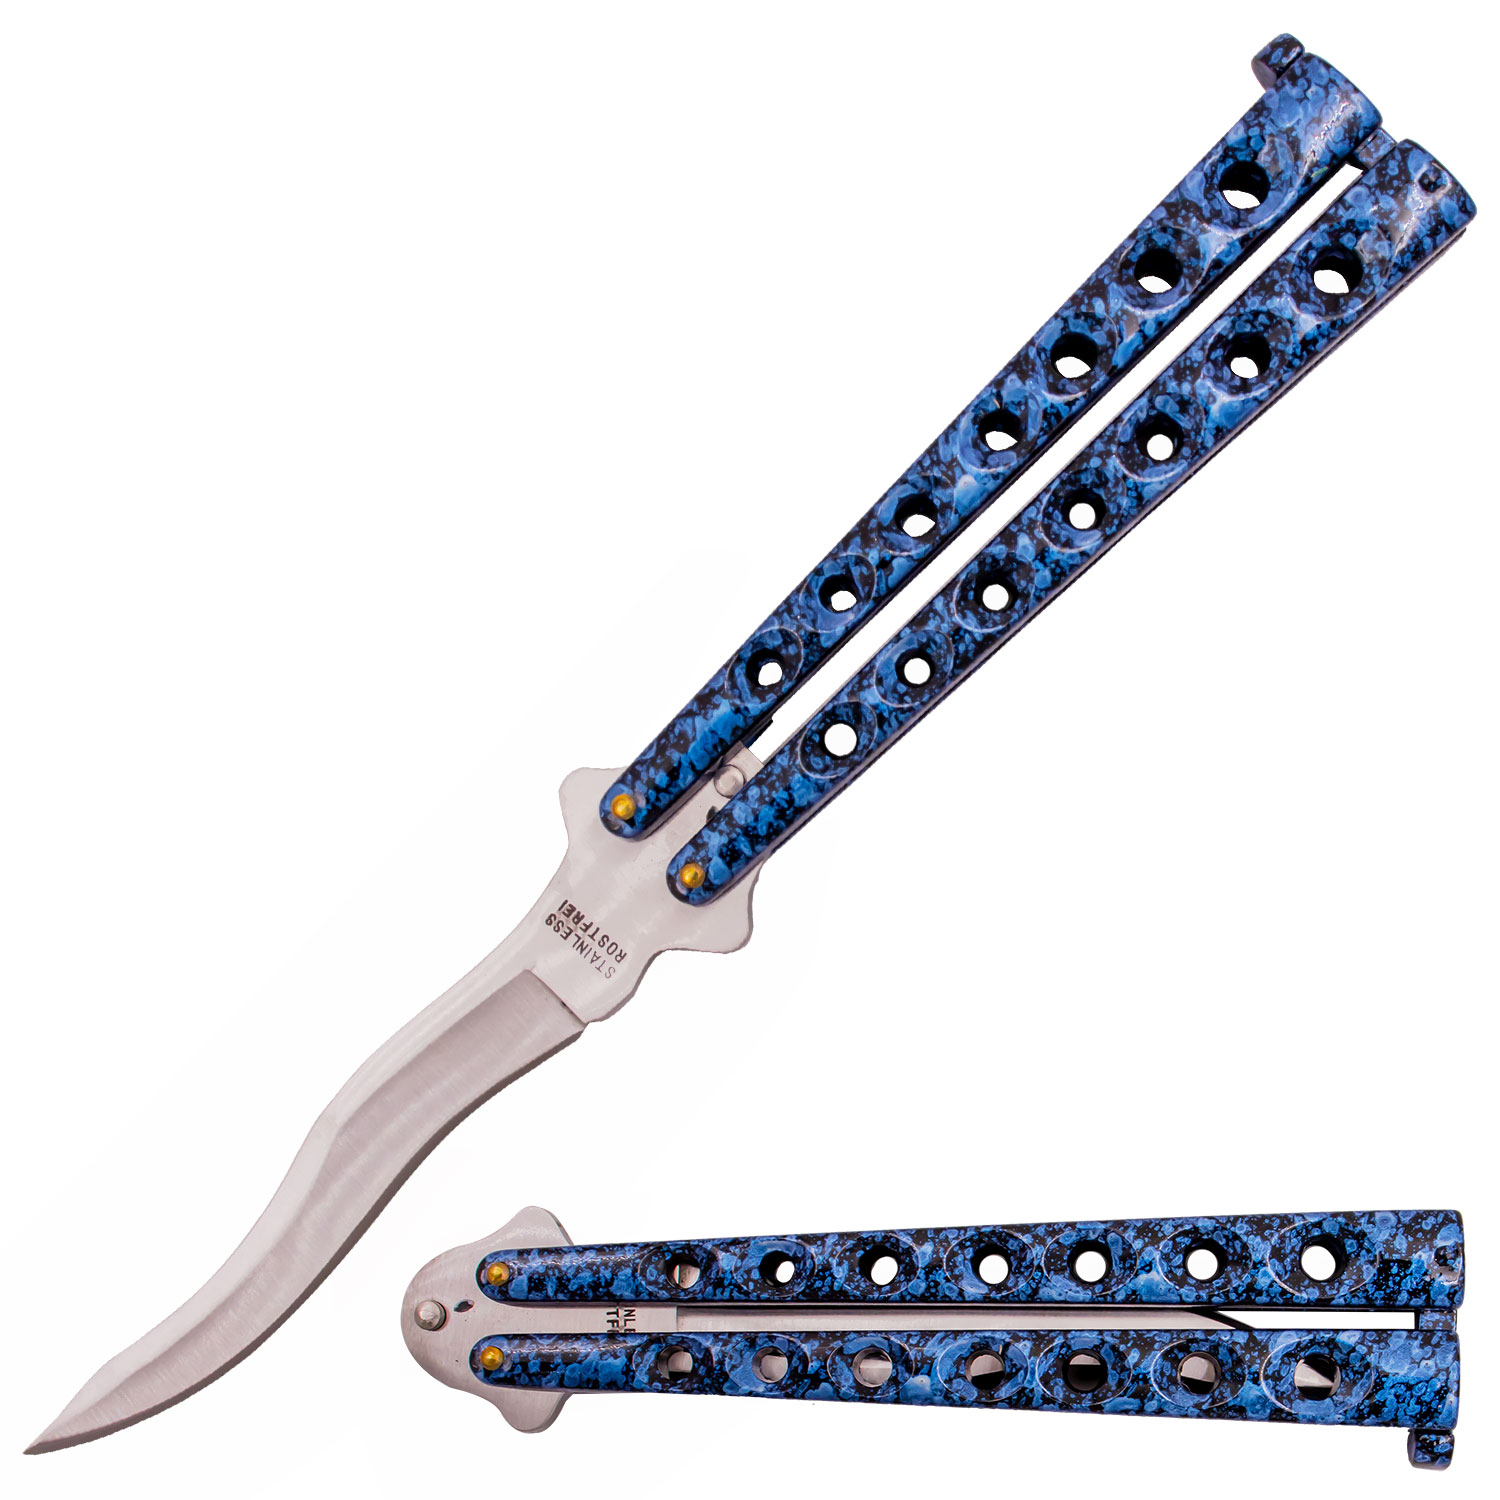 8.8 Inch Kriss Blade Butterfly Knife (Blue)